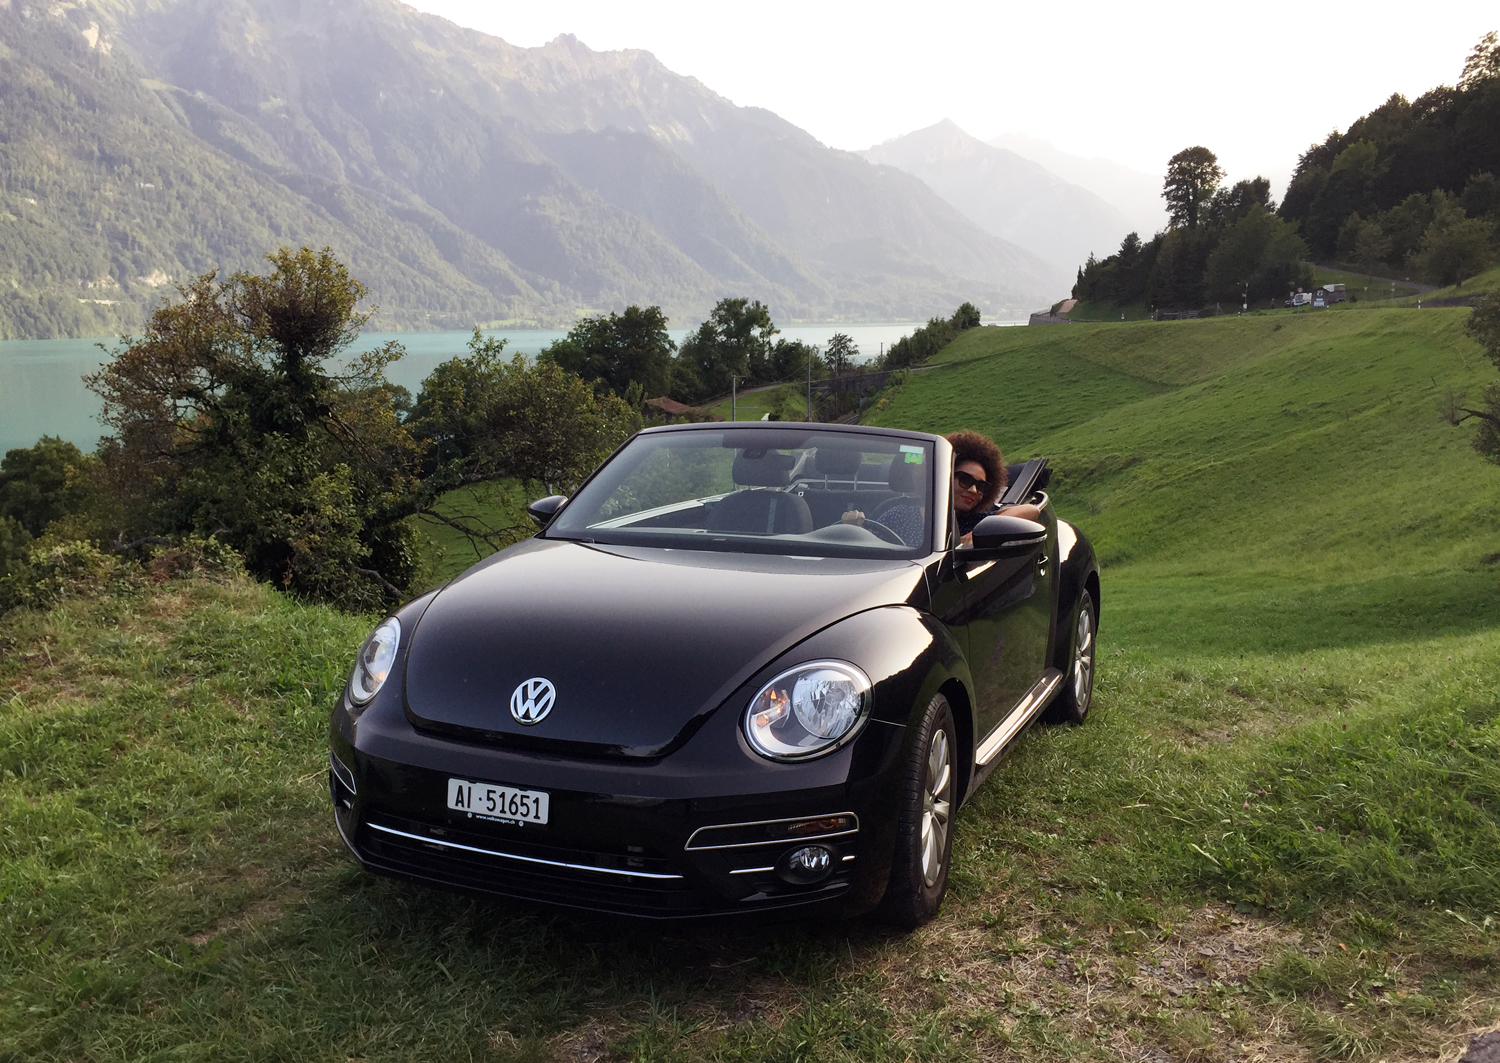 mercredie-blog-geneve-suisse-voyage-my-switzerland-grand-tour-roadtrip-europcar-accor-new-beetle-cabriolet-interlaken-decapotable